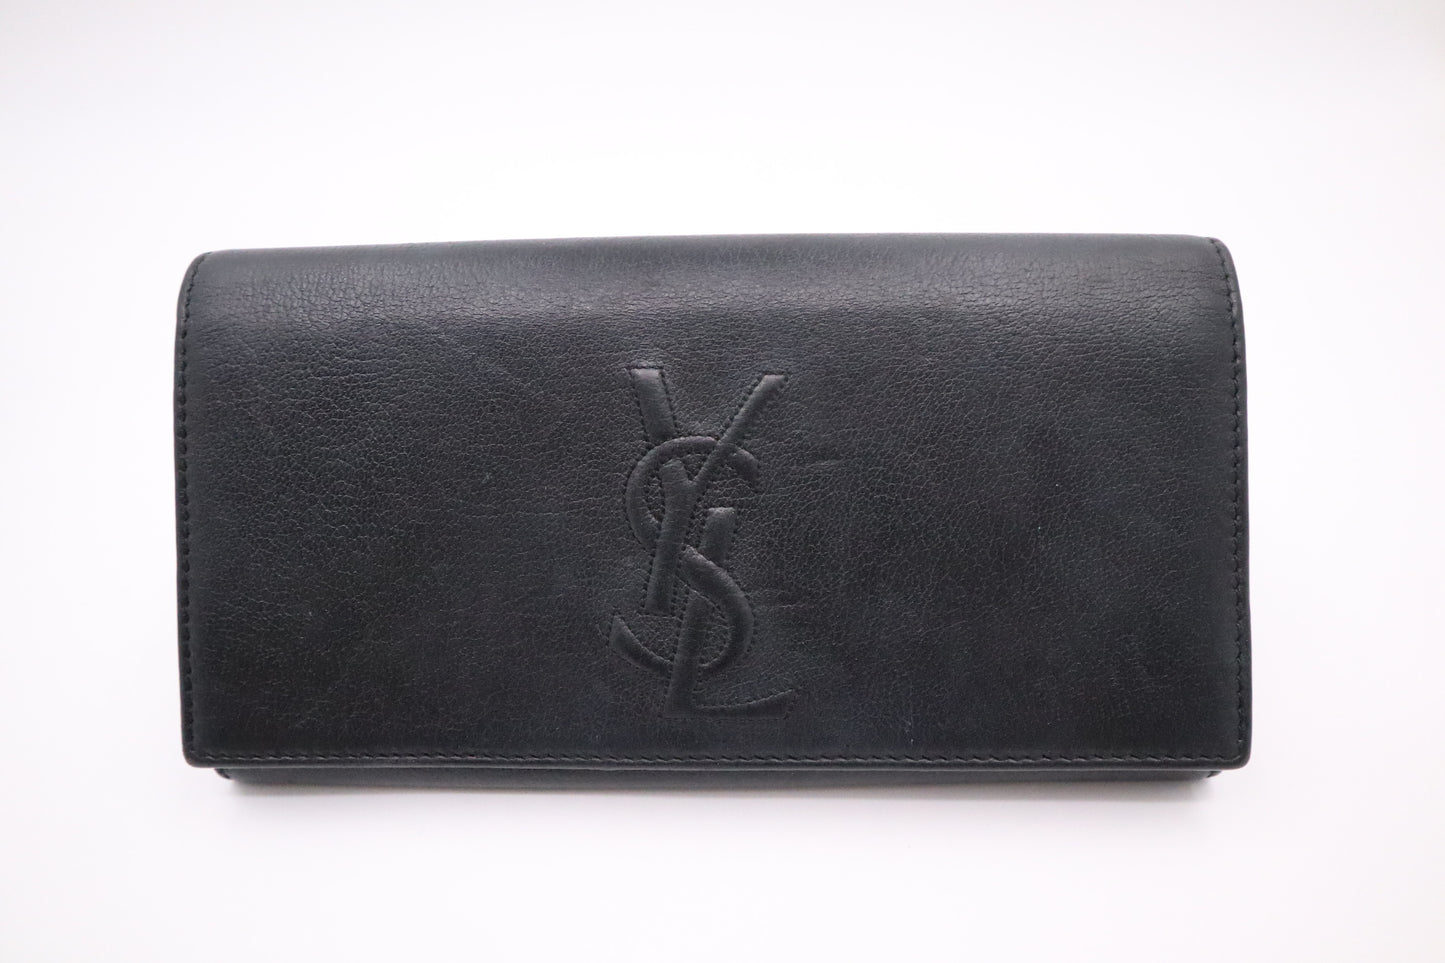 YSL Saint Laurent Long Wallet in Black Leather